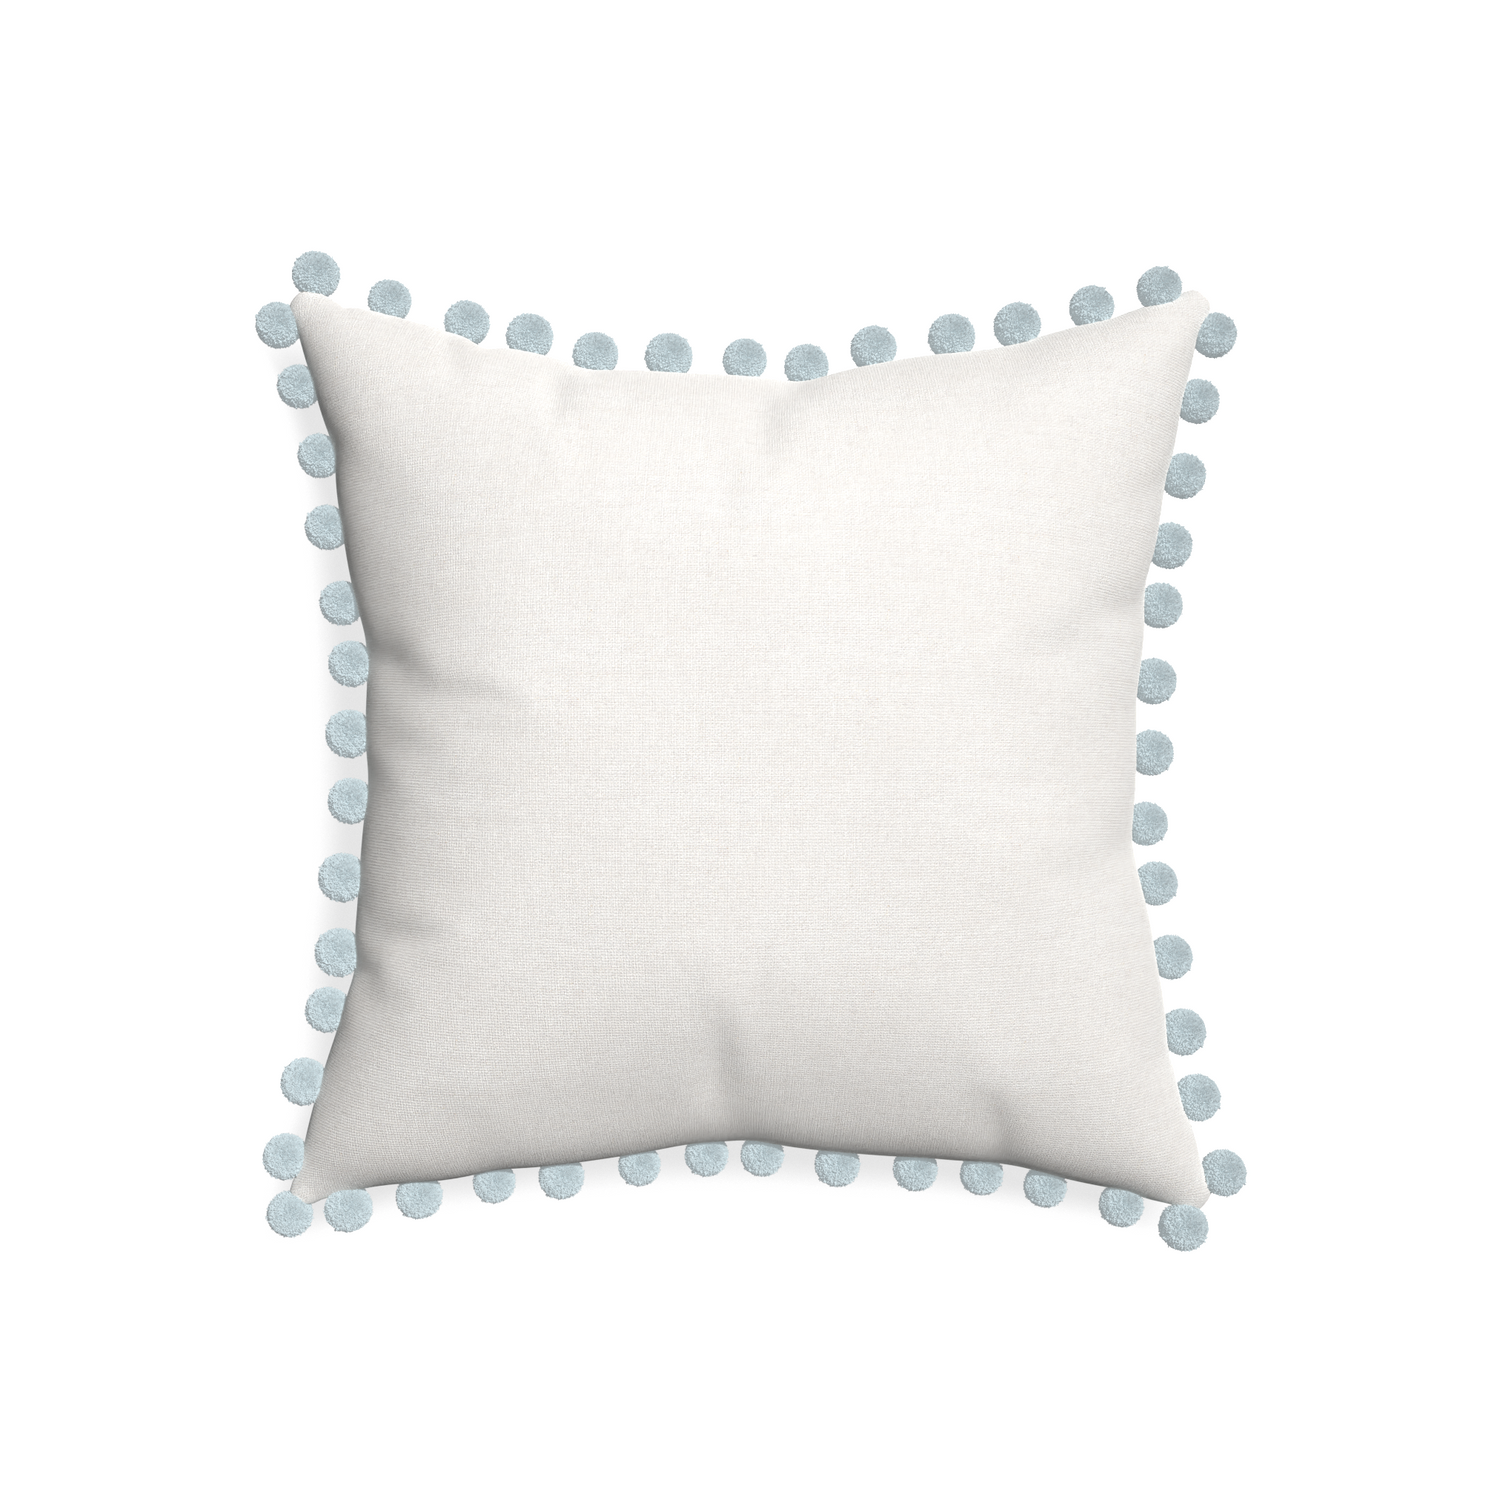 20-square flour custom pillow with powder pom pom on white background